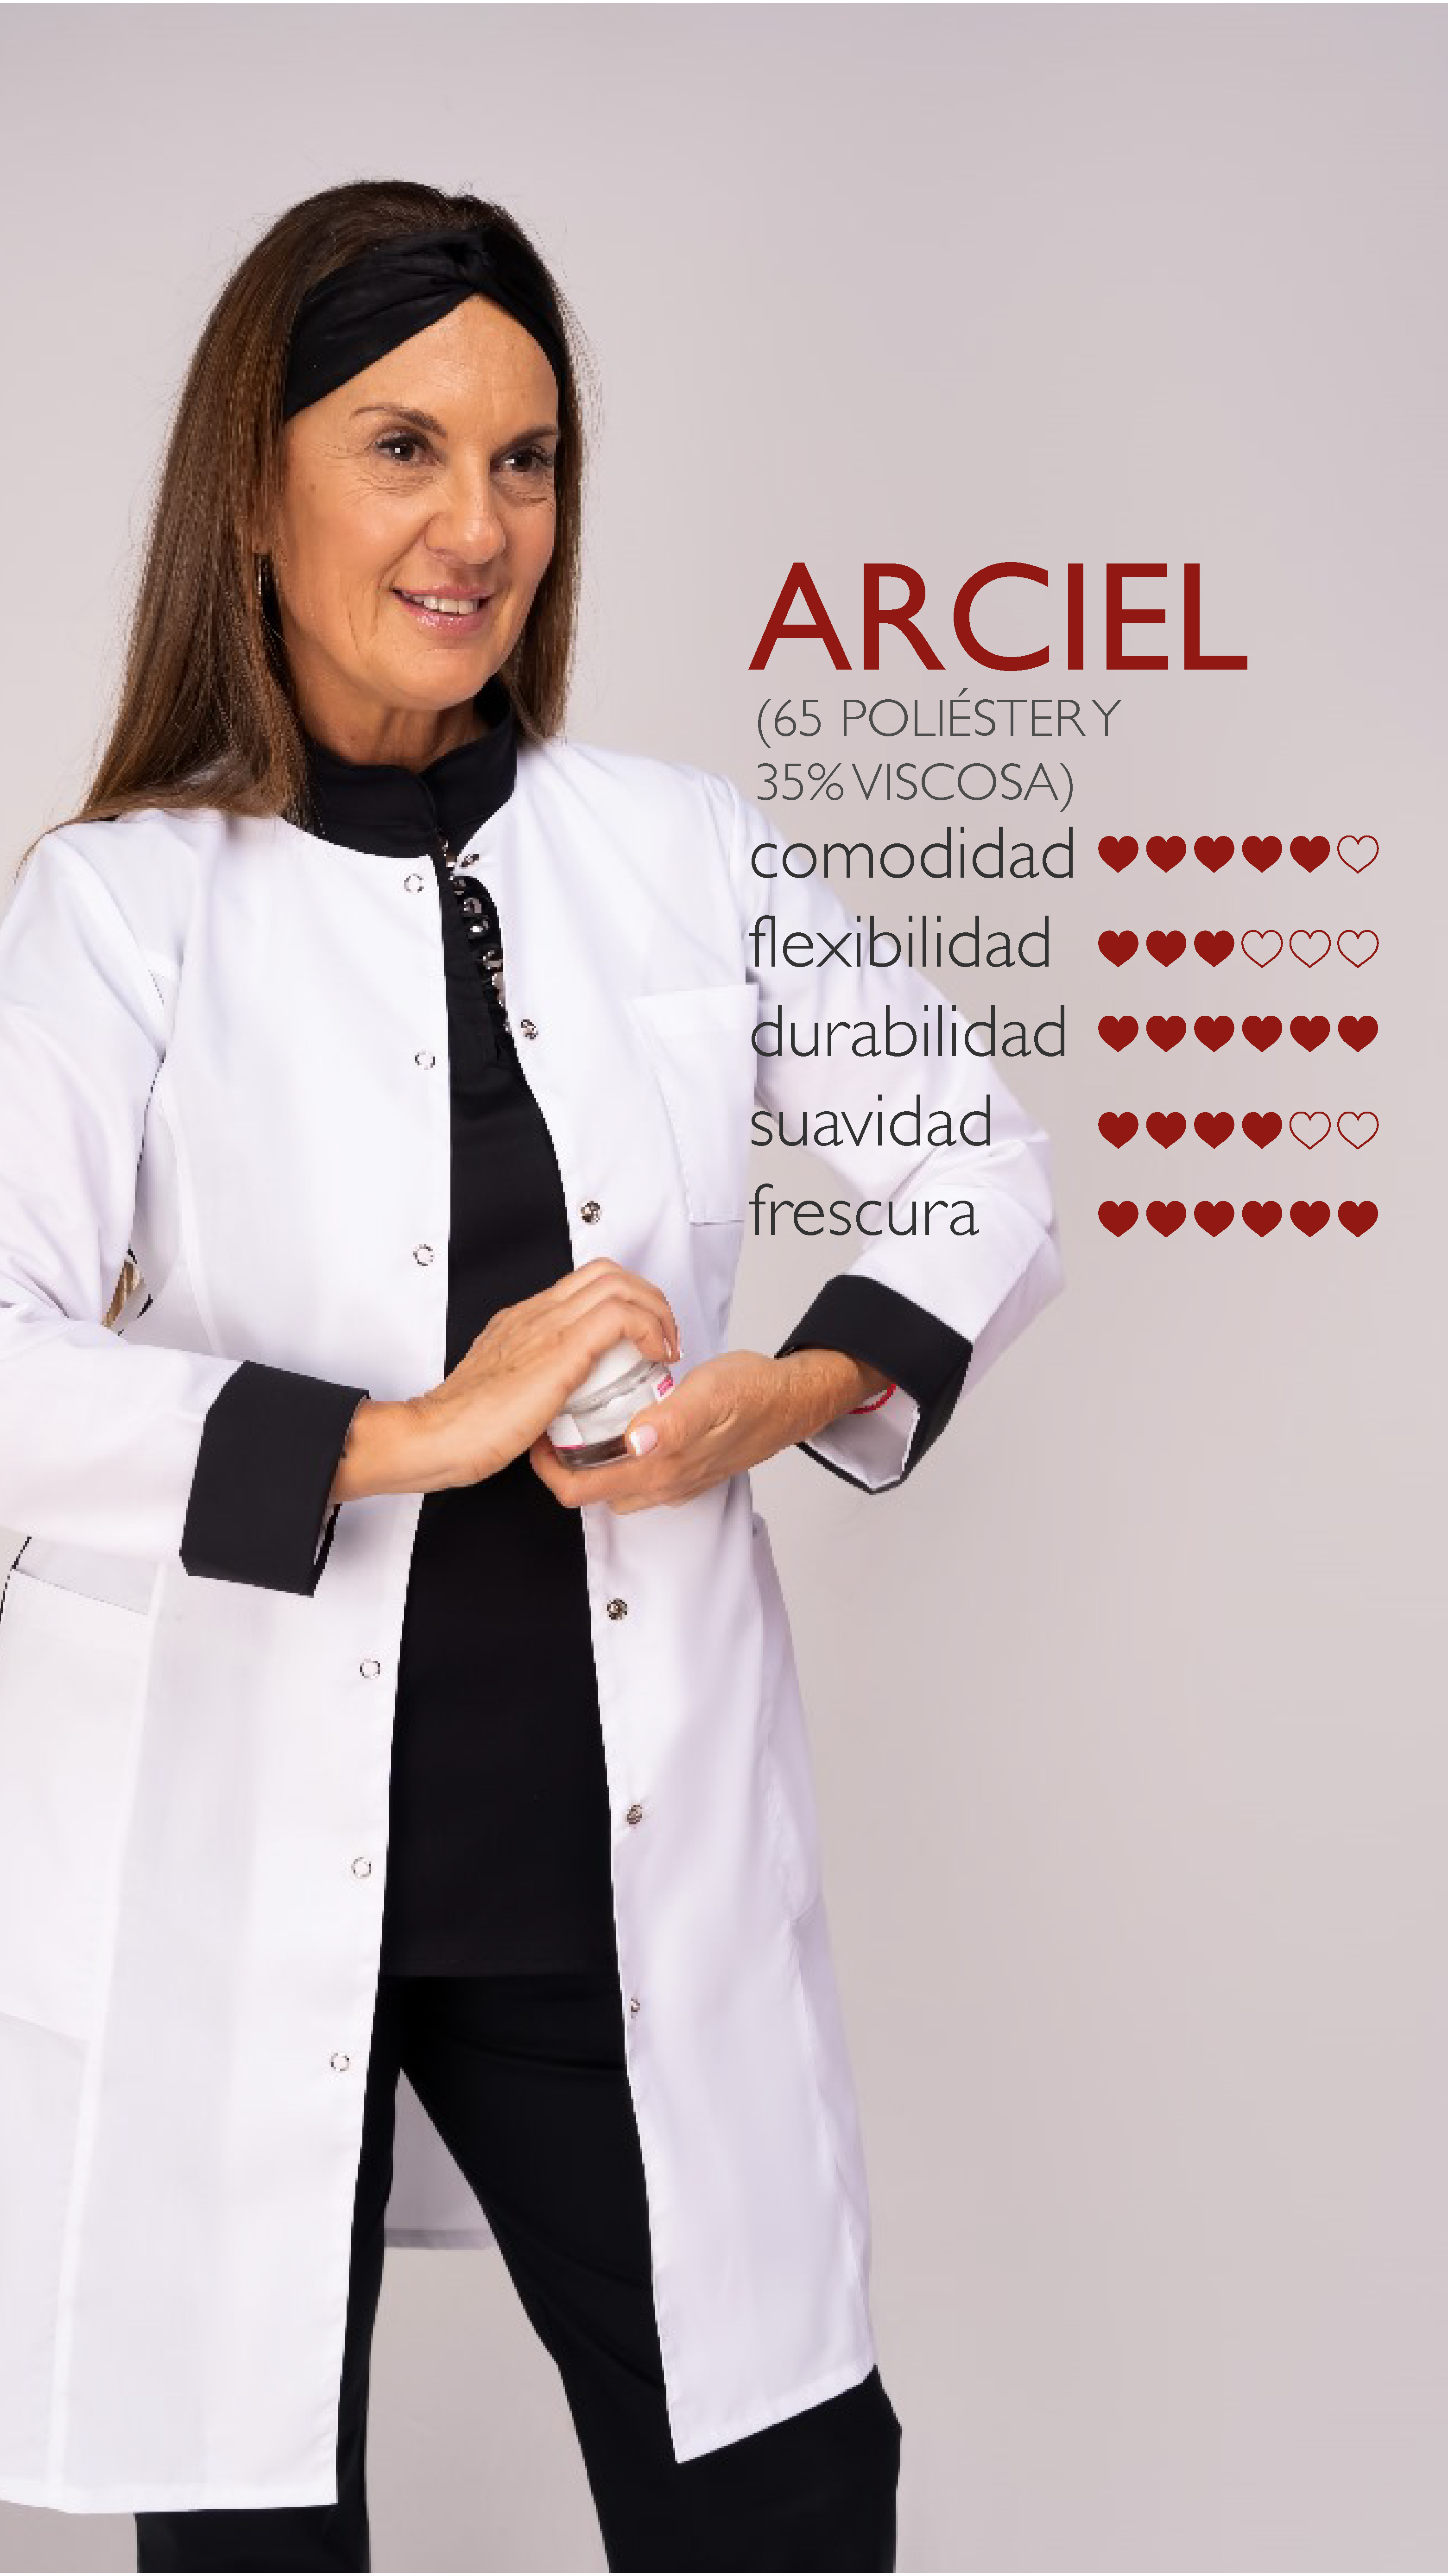 Arciel